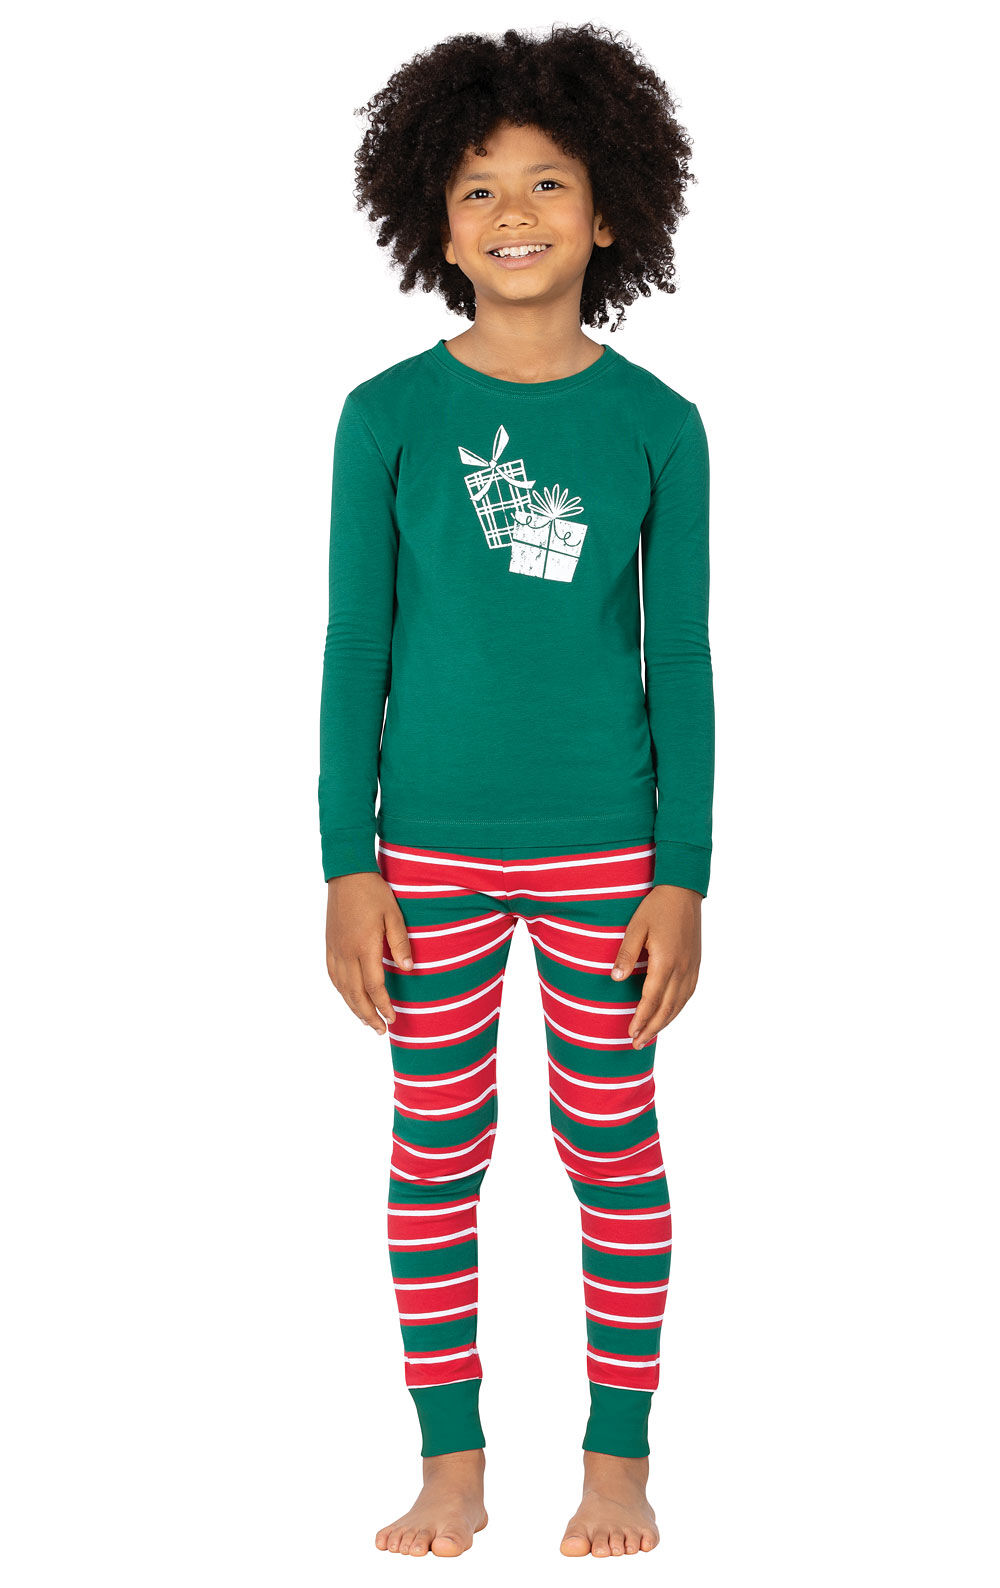 With Feet Warm Romper Girls Kids Pyjamas Comfortable Unisex Christmas Sleepwear One piece 100% Polyester 5 years Sizes: 6 months Striped Red-Green-White Boys Fleece Elowel 